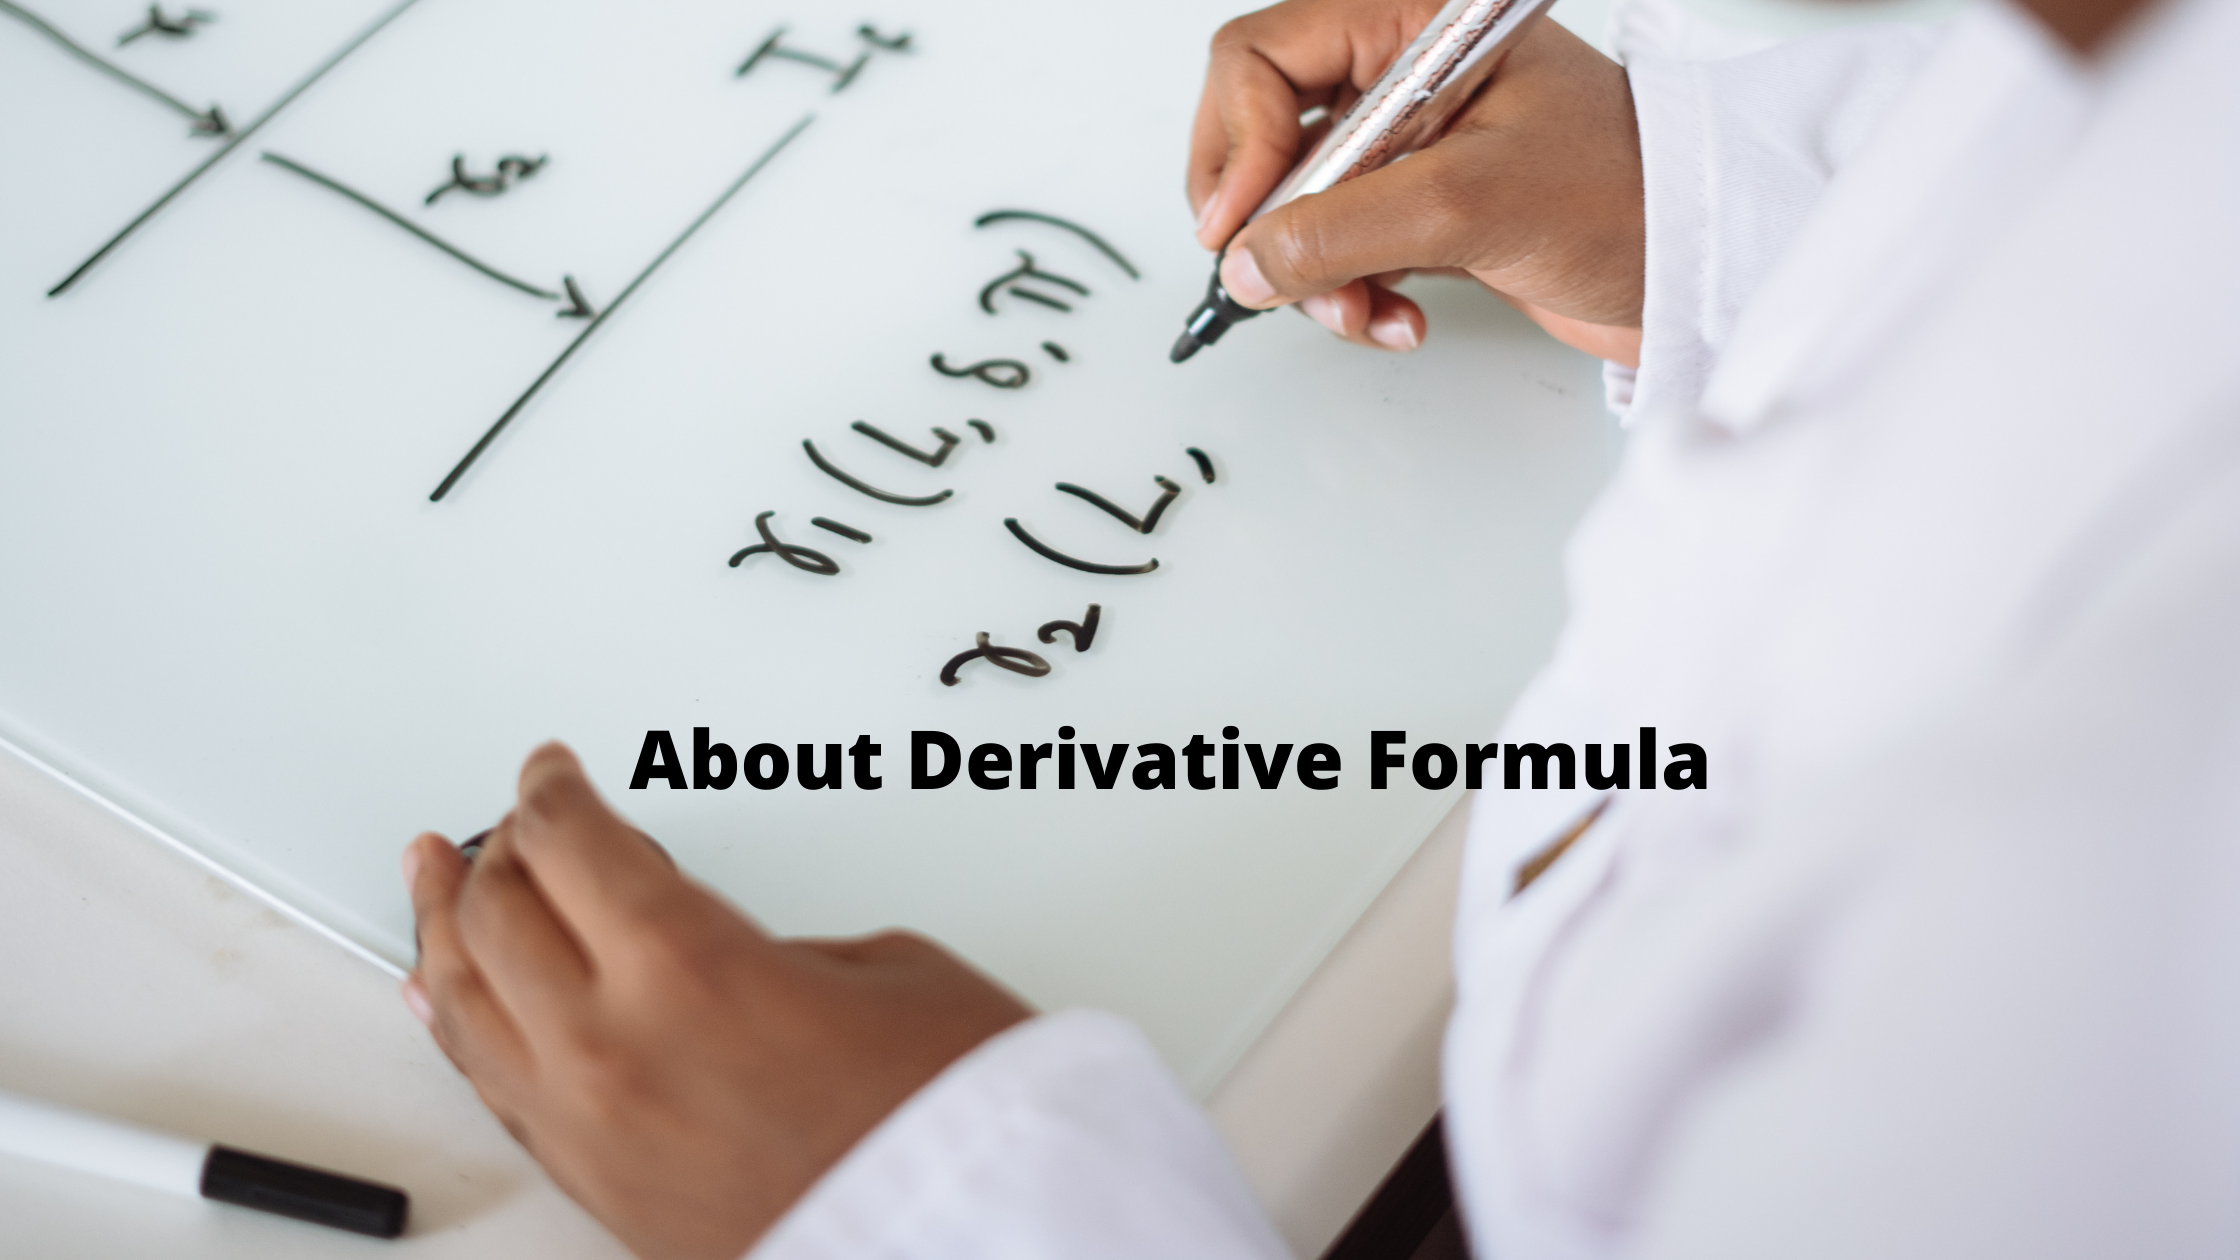 About Derivative Formula